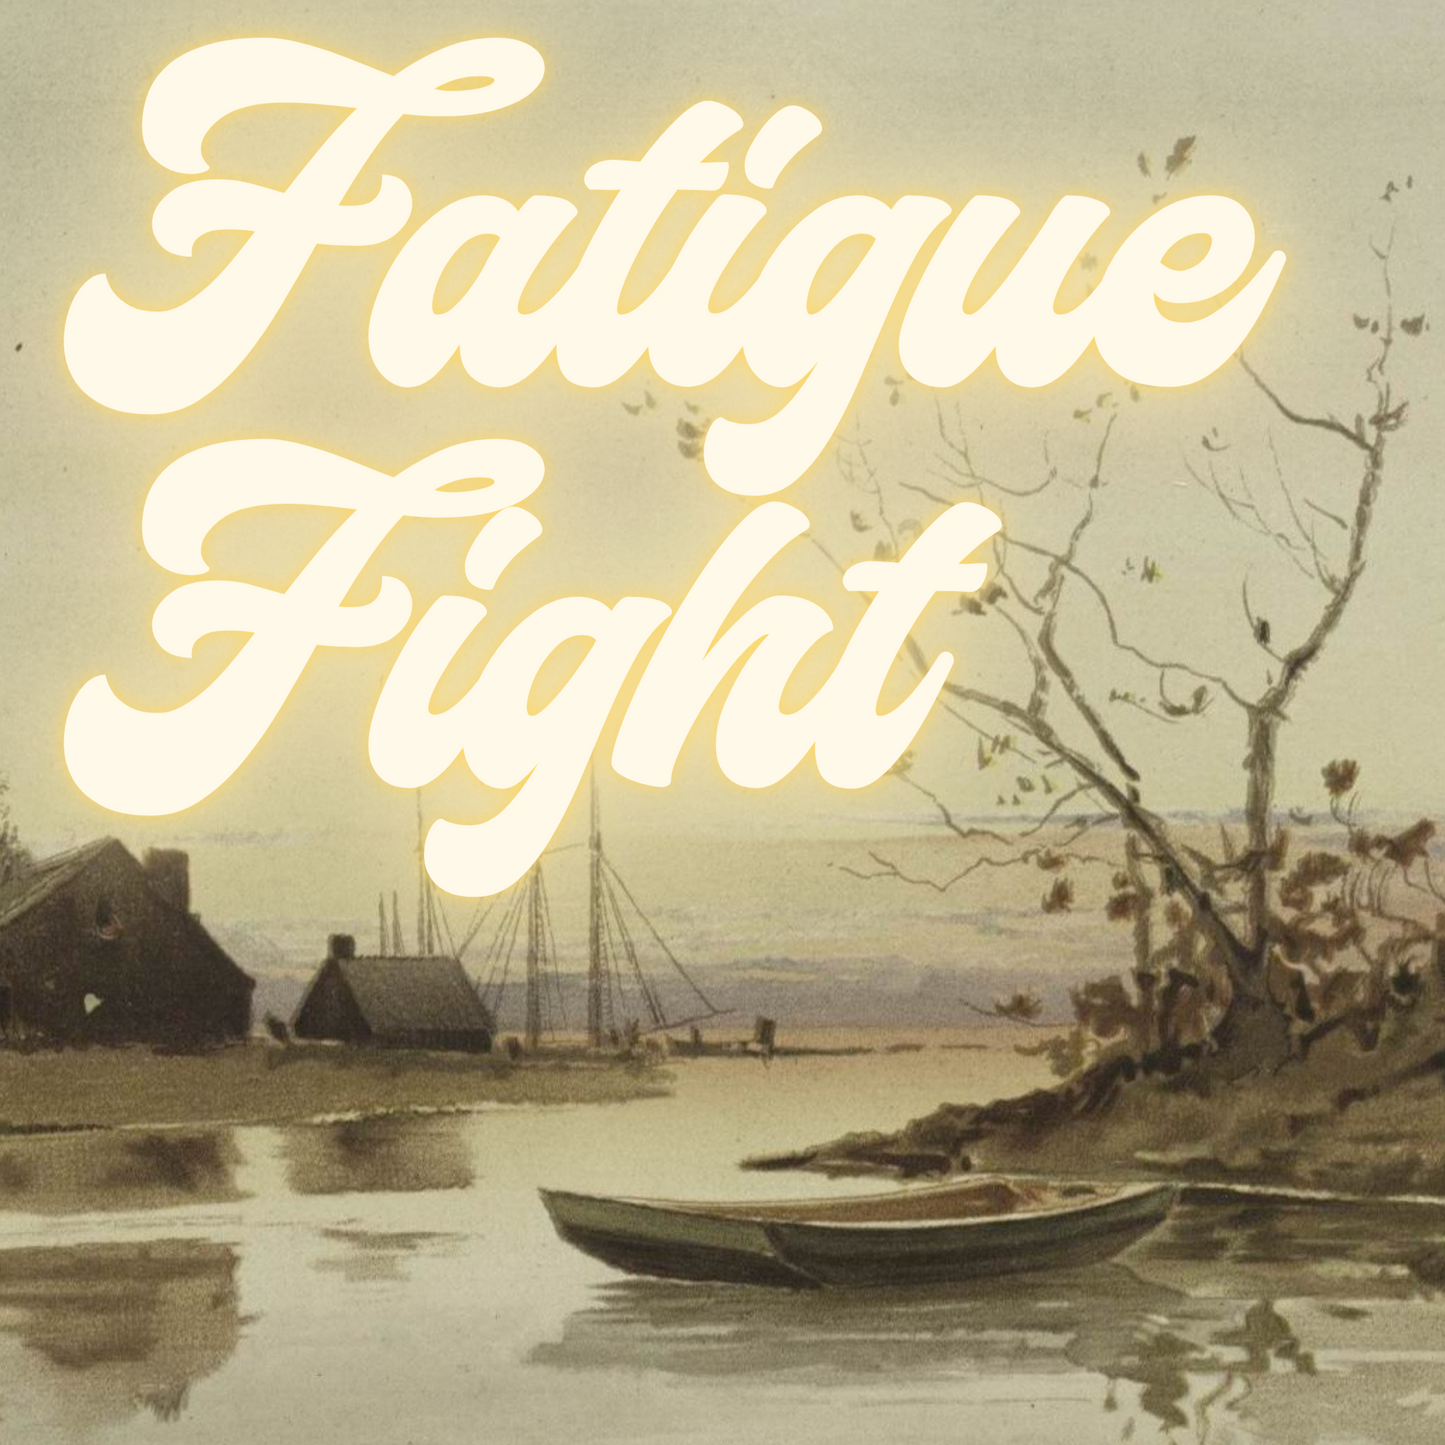 Fatigue Fight Spritz (wake up)